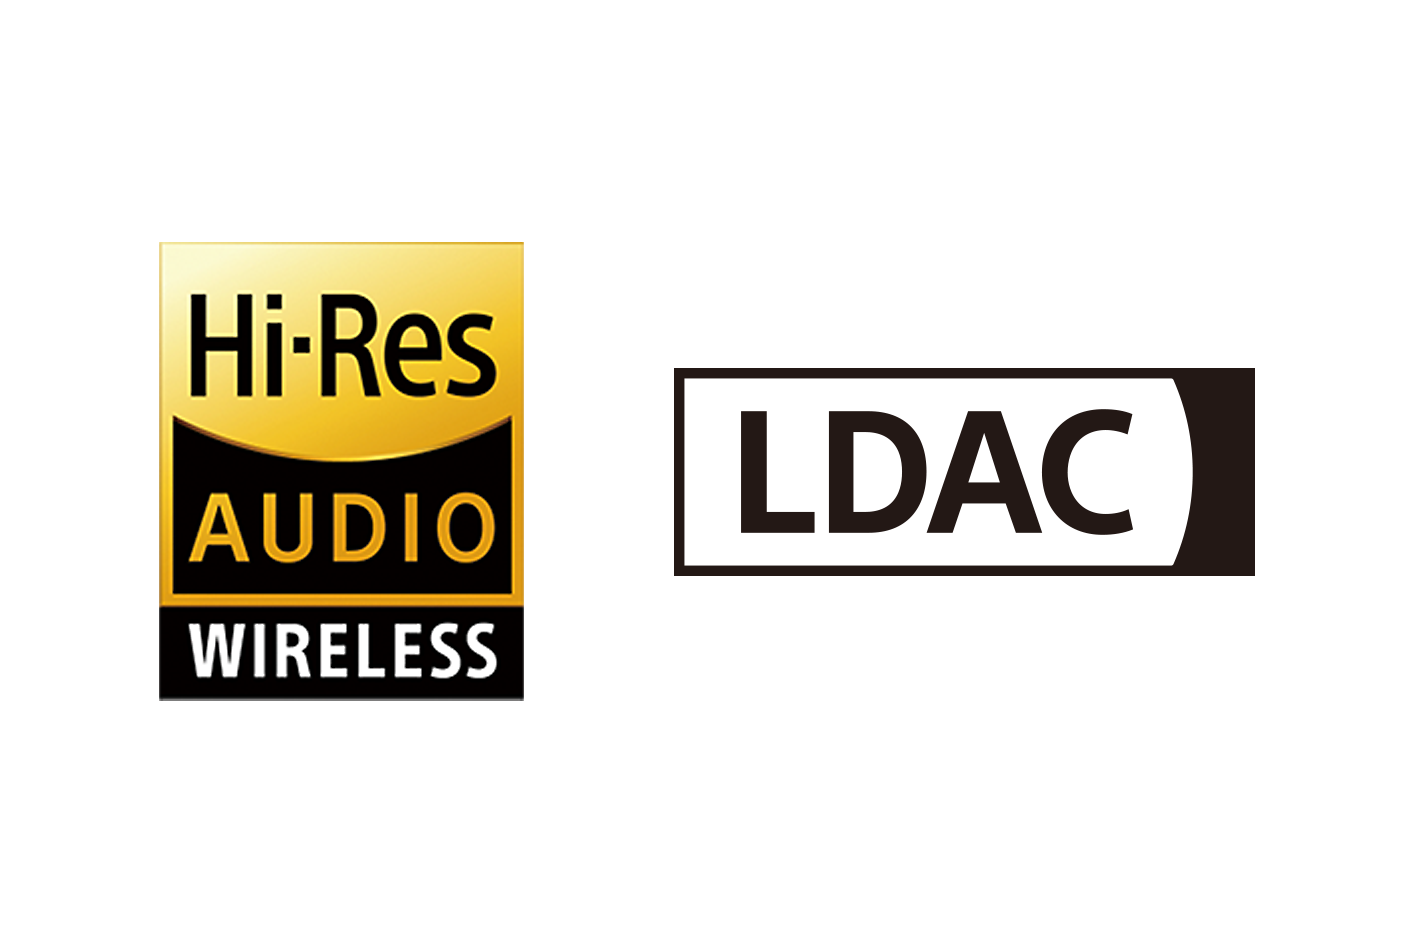 Logótipos Hi-Res Audio Wireless e LDAC.